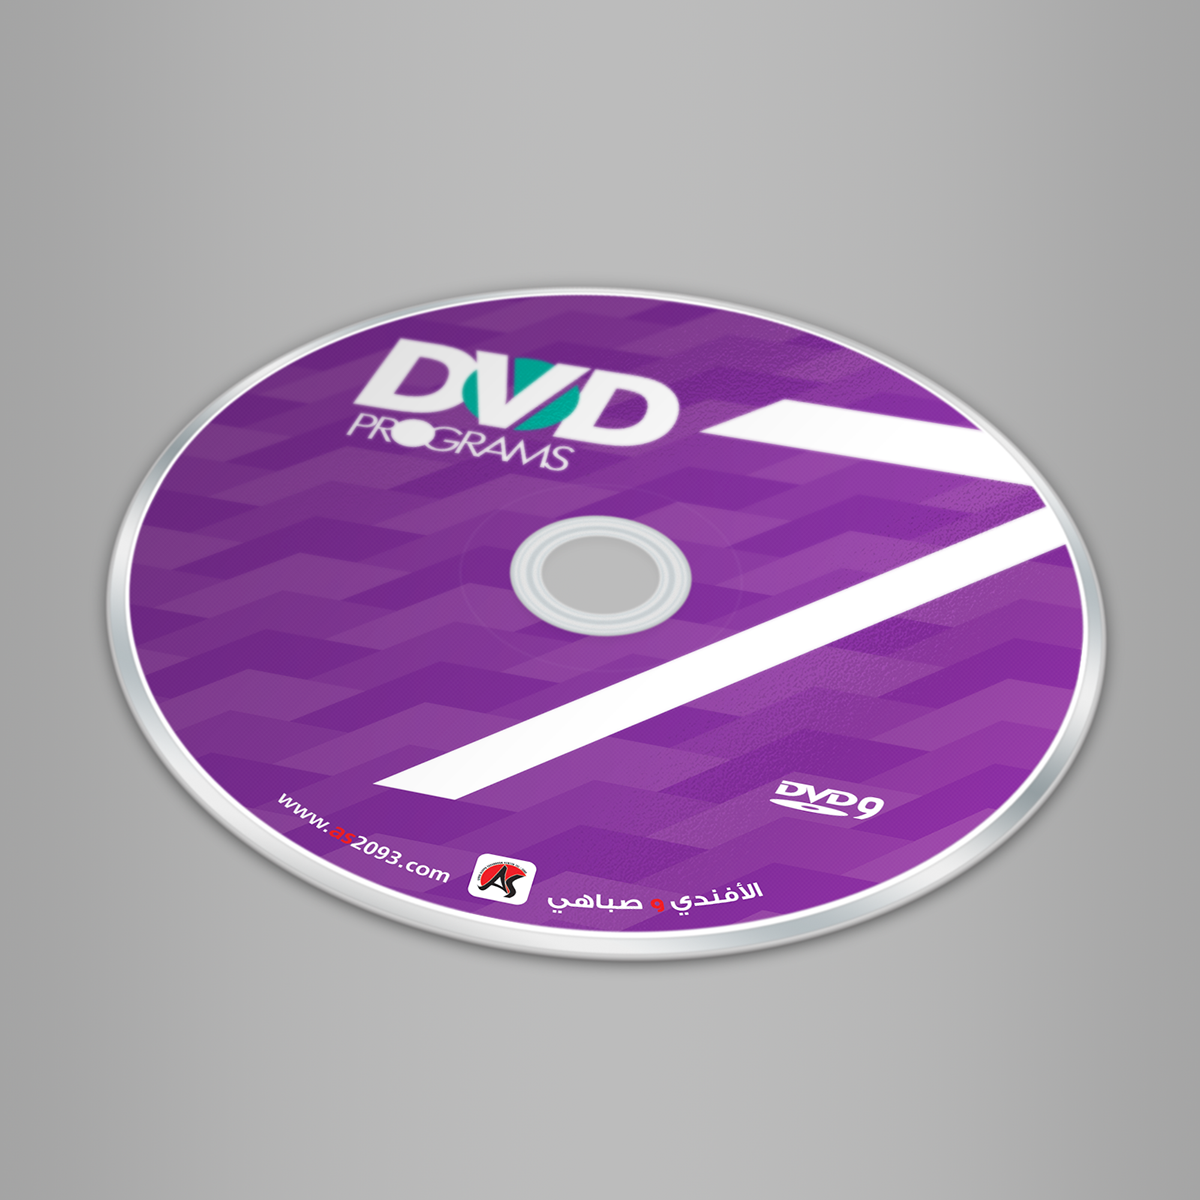 covers DVD software Program game Spiel